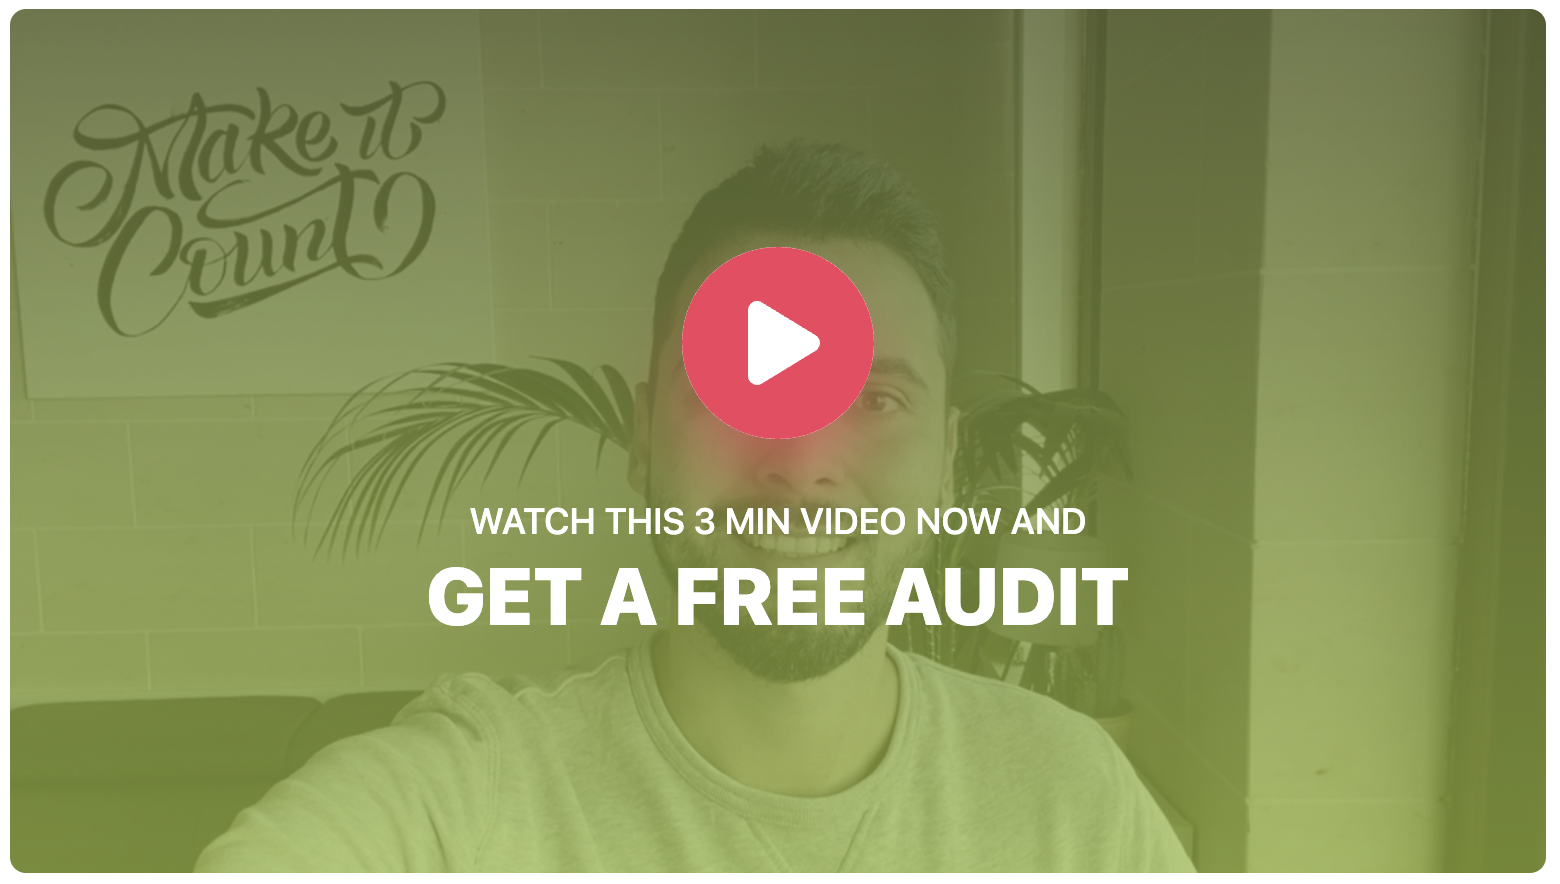 Get a free audit